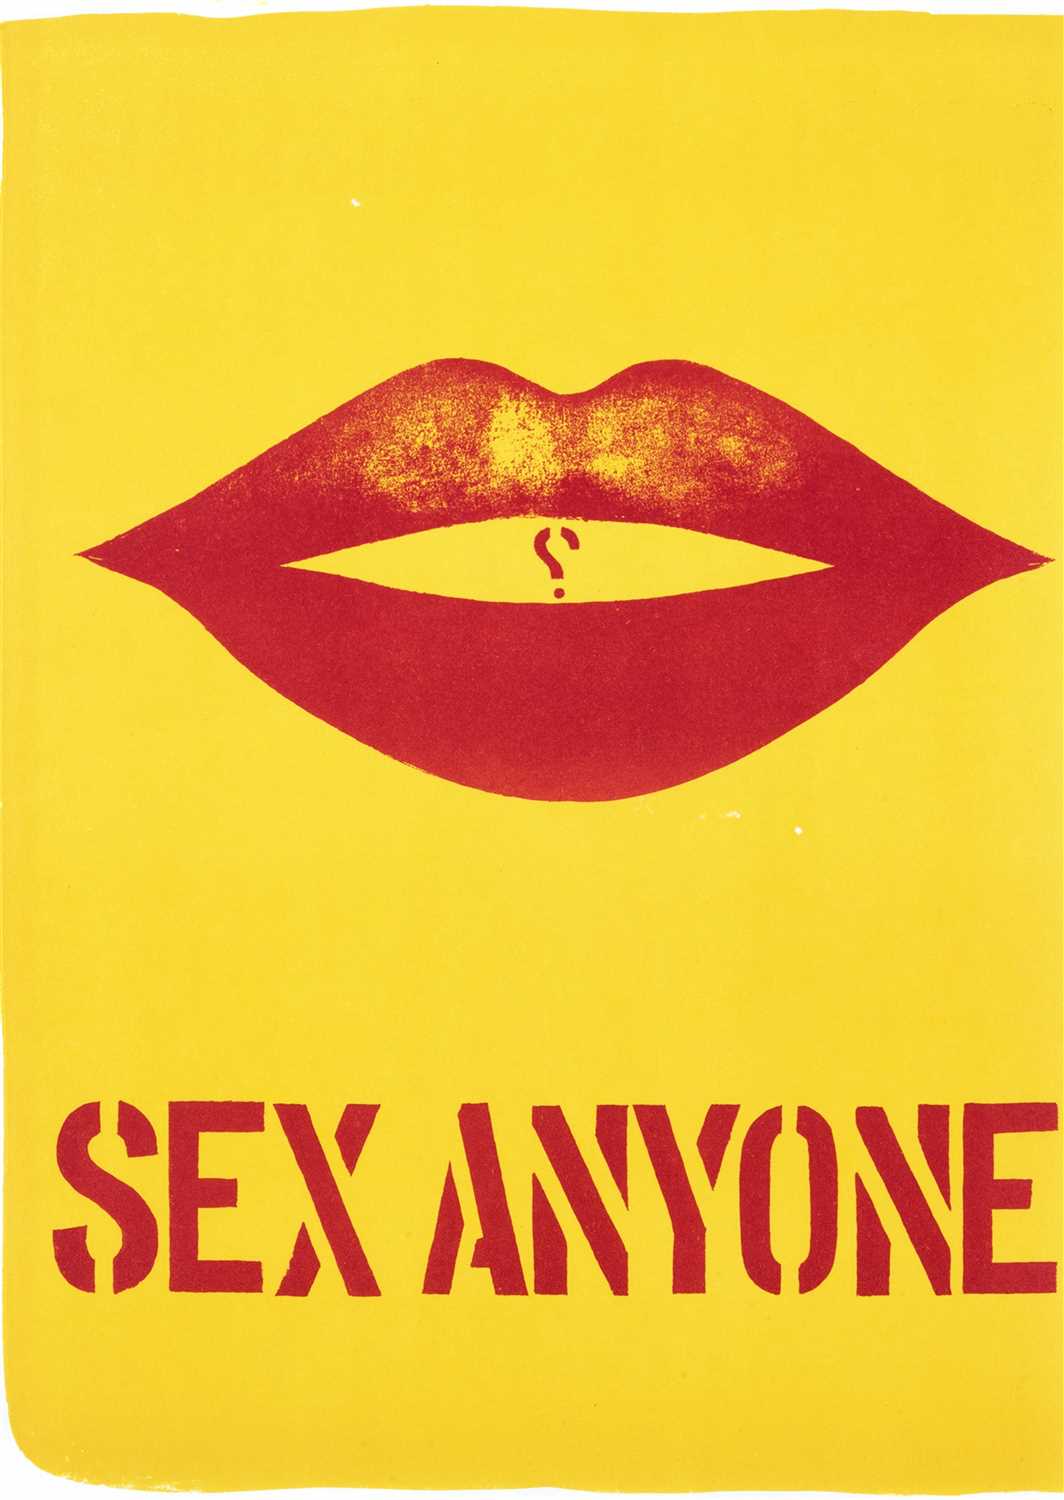 Lot 99 - Robert Indiana (American 1928-2018), 'Sex Anyone', 1964